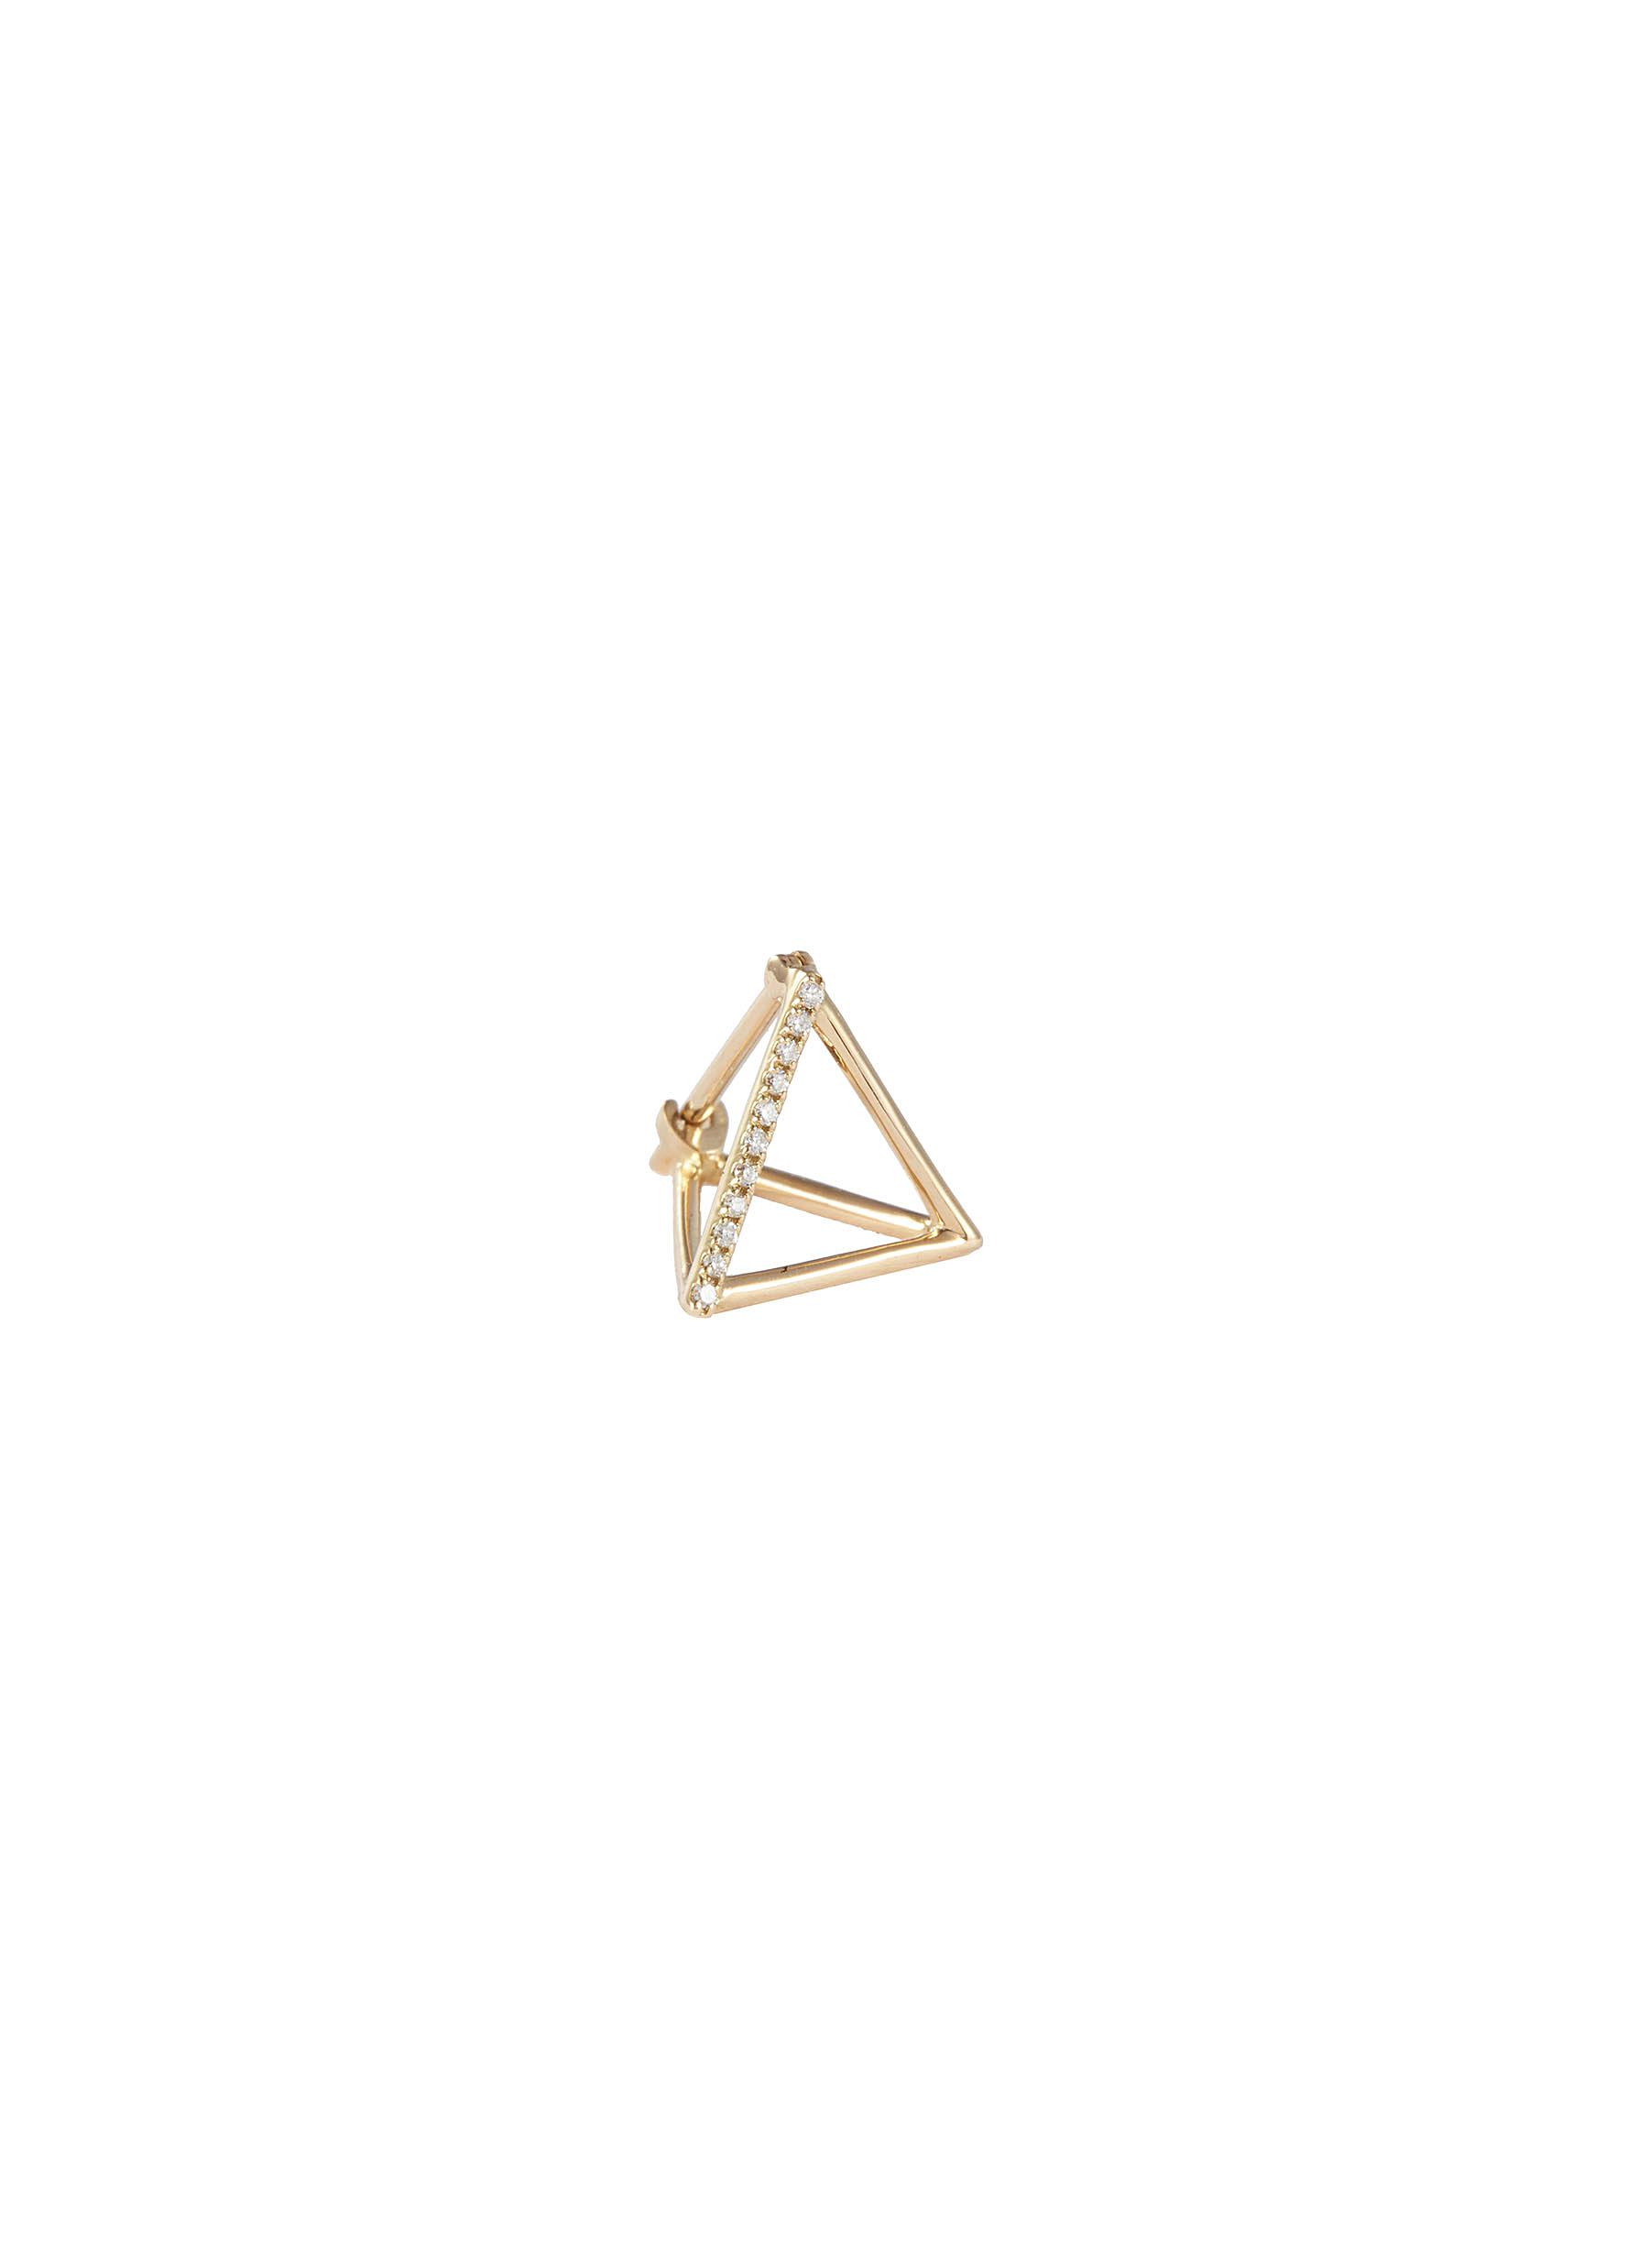 ’Triangle’ diamond 18k yellow gold pyramid single earring - 10mm